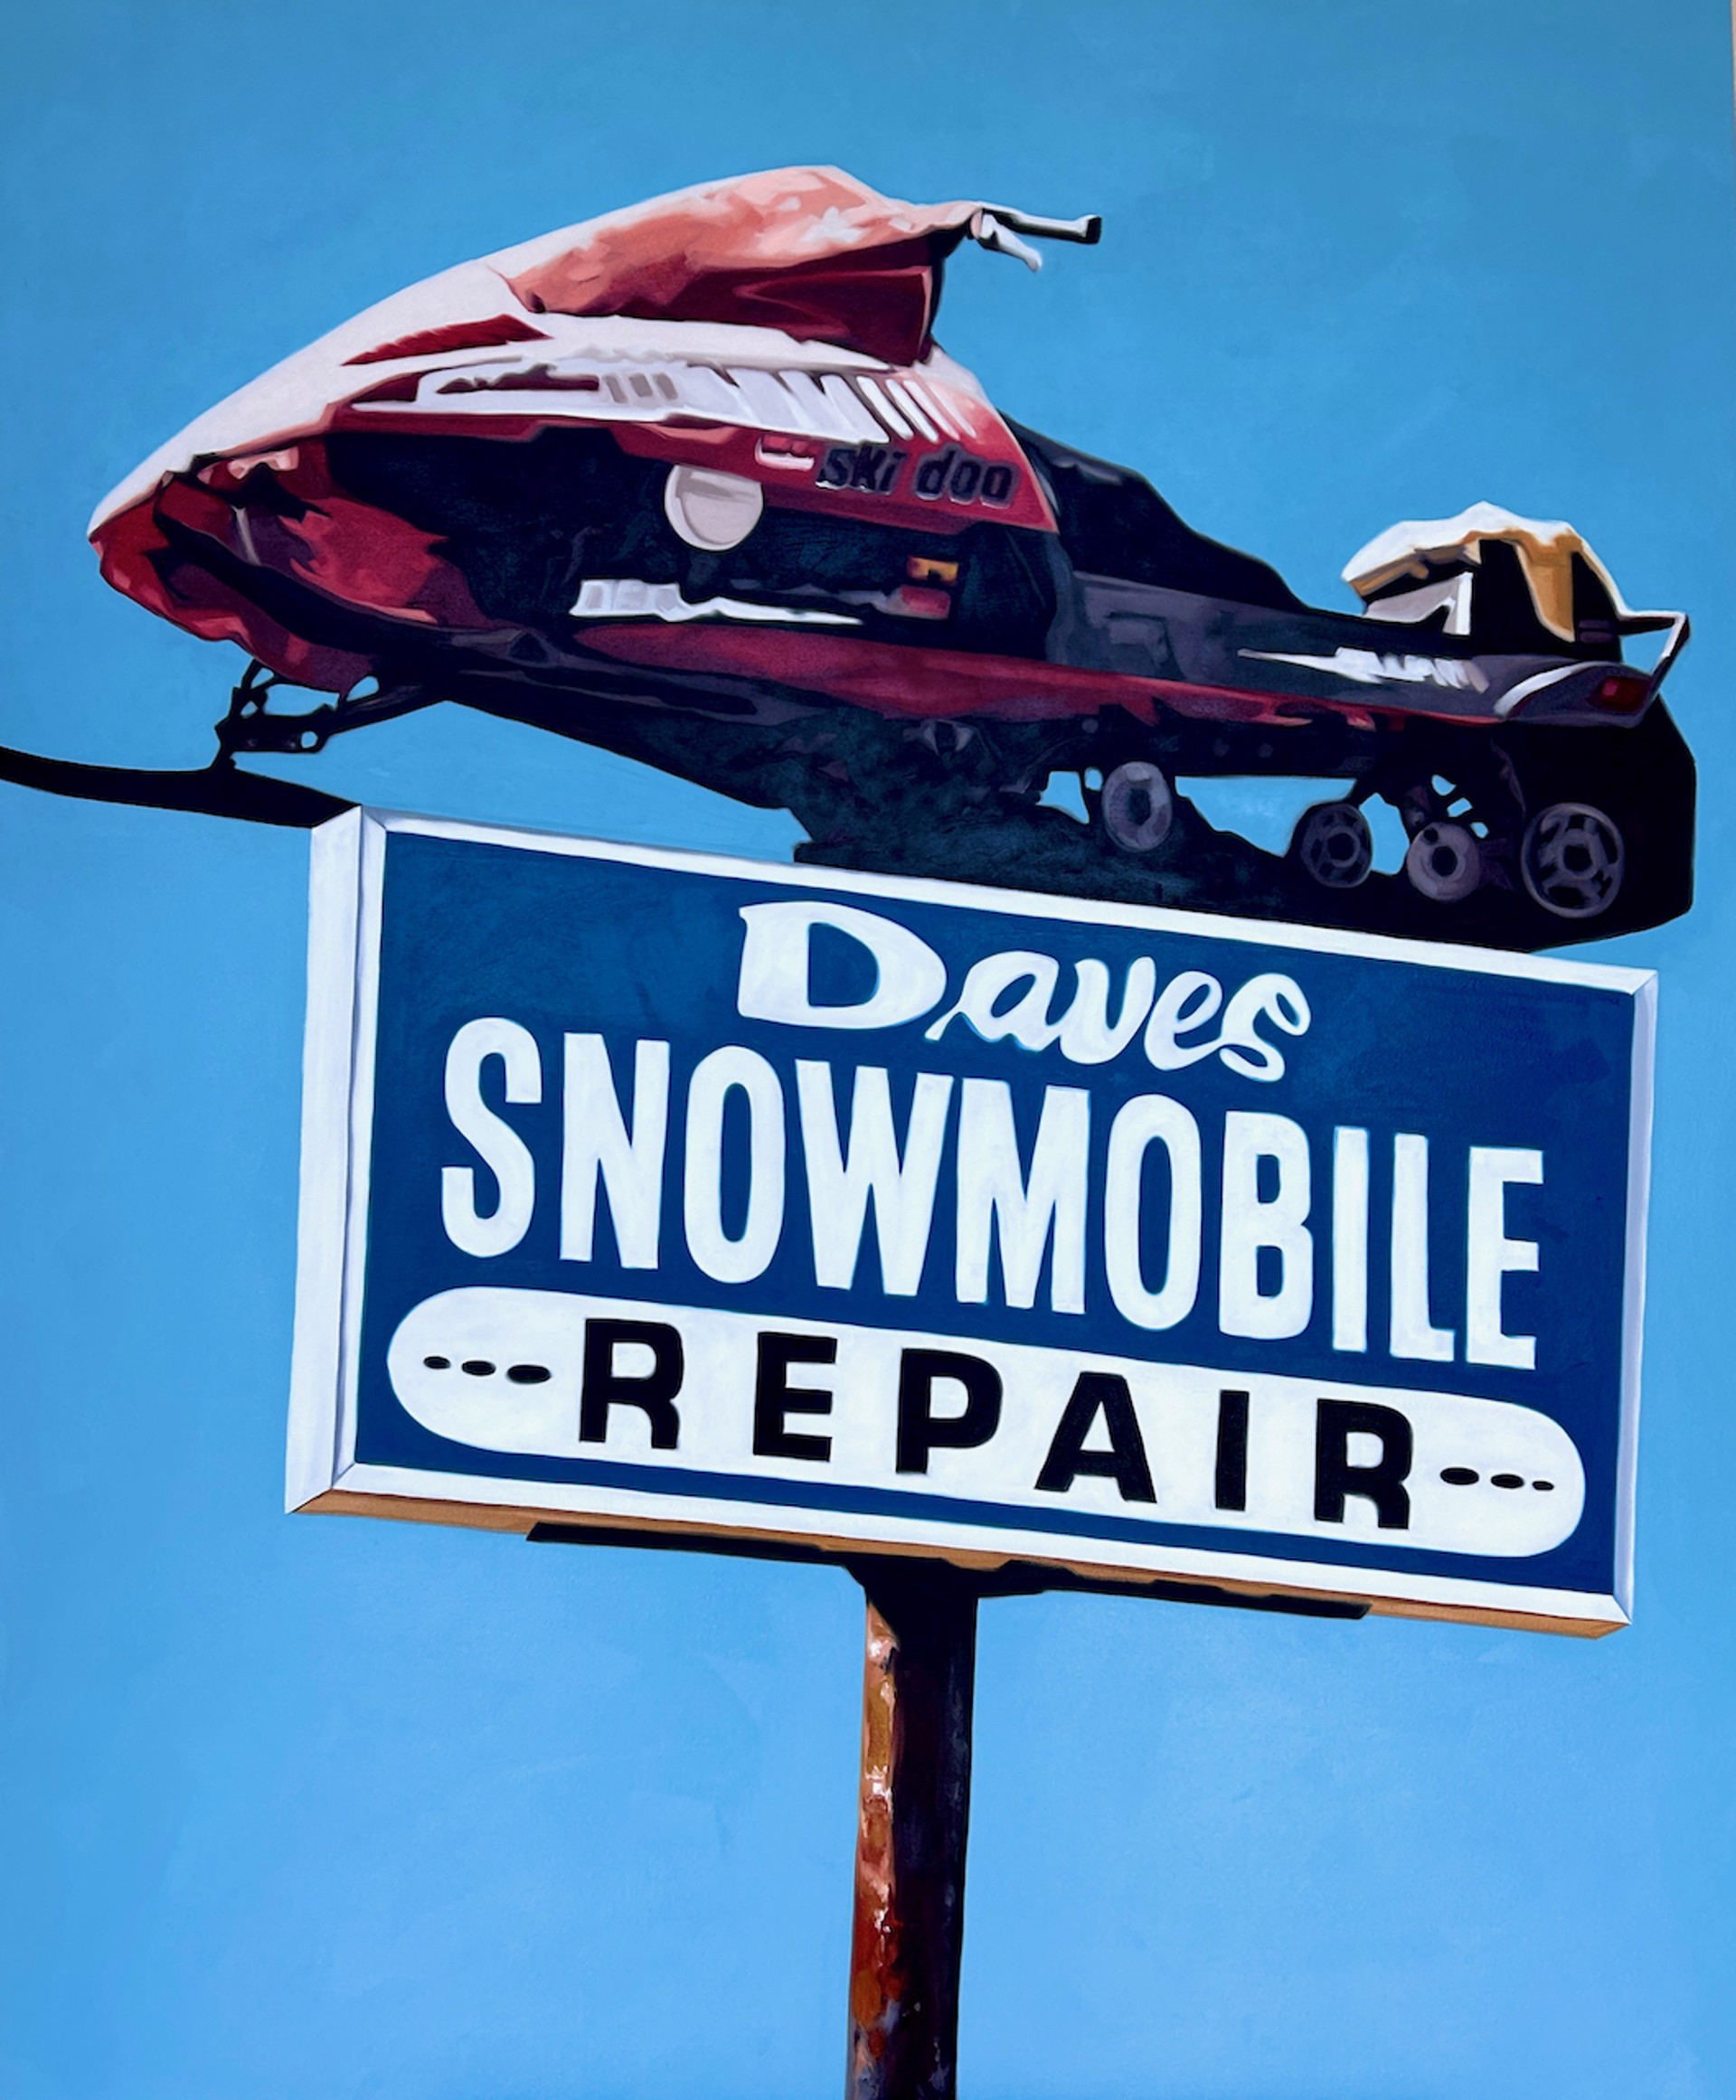 Dave's Snowmobile Repair by HEATHER MILLAR